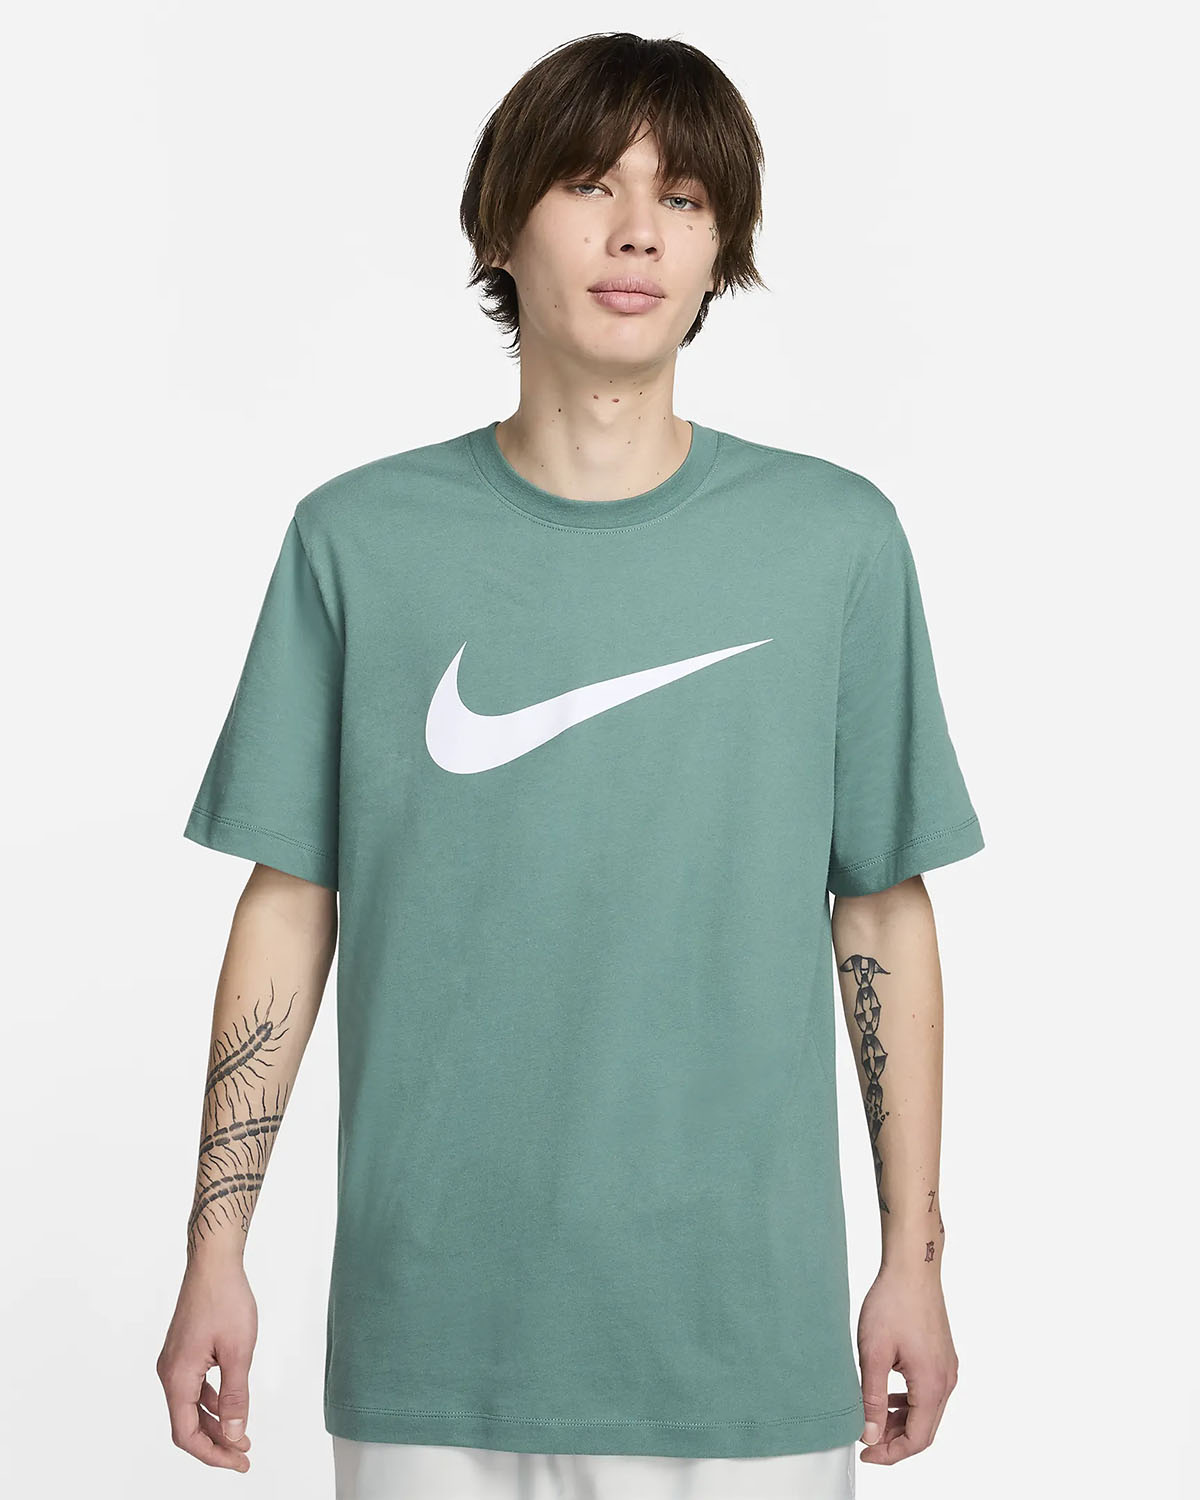 Nike Sportswear Swoosh T Shirt Bicoastal